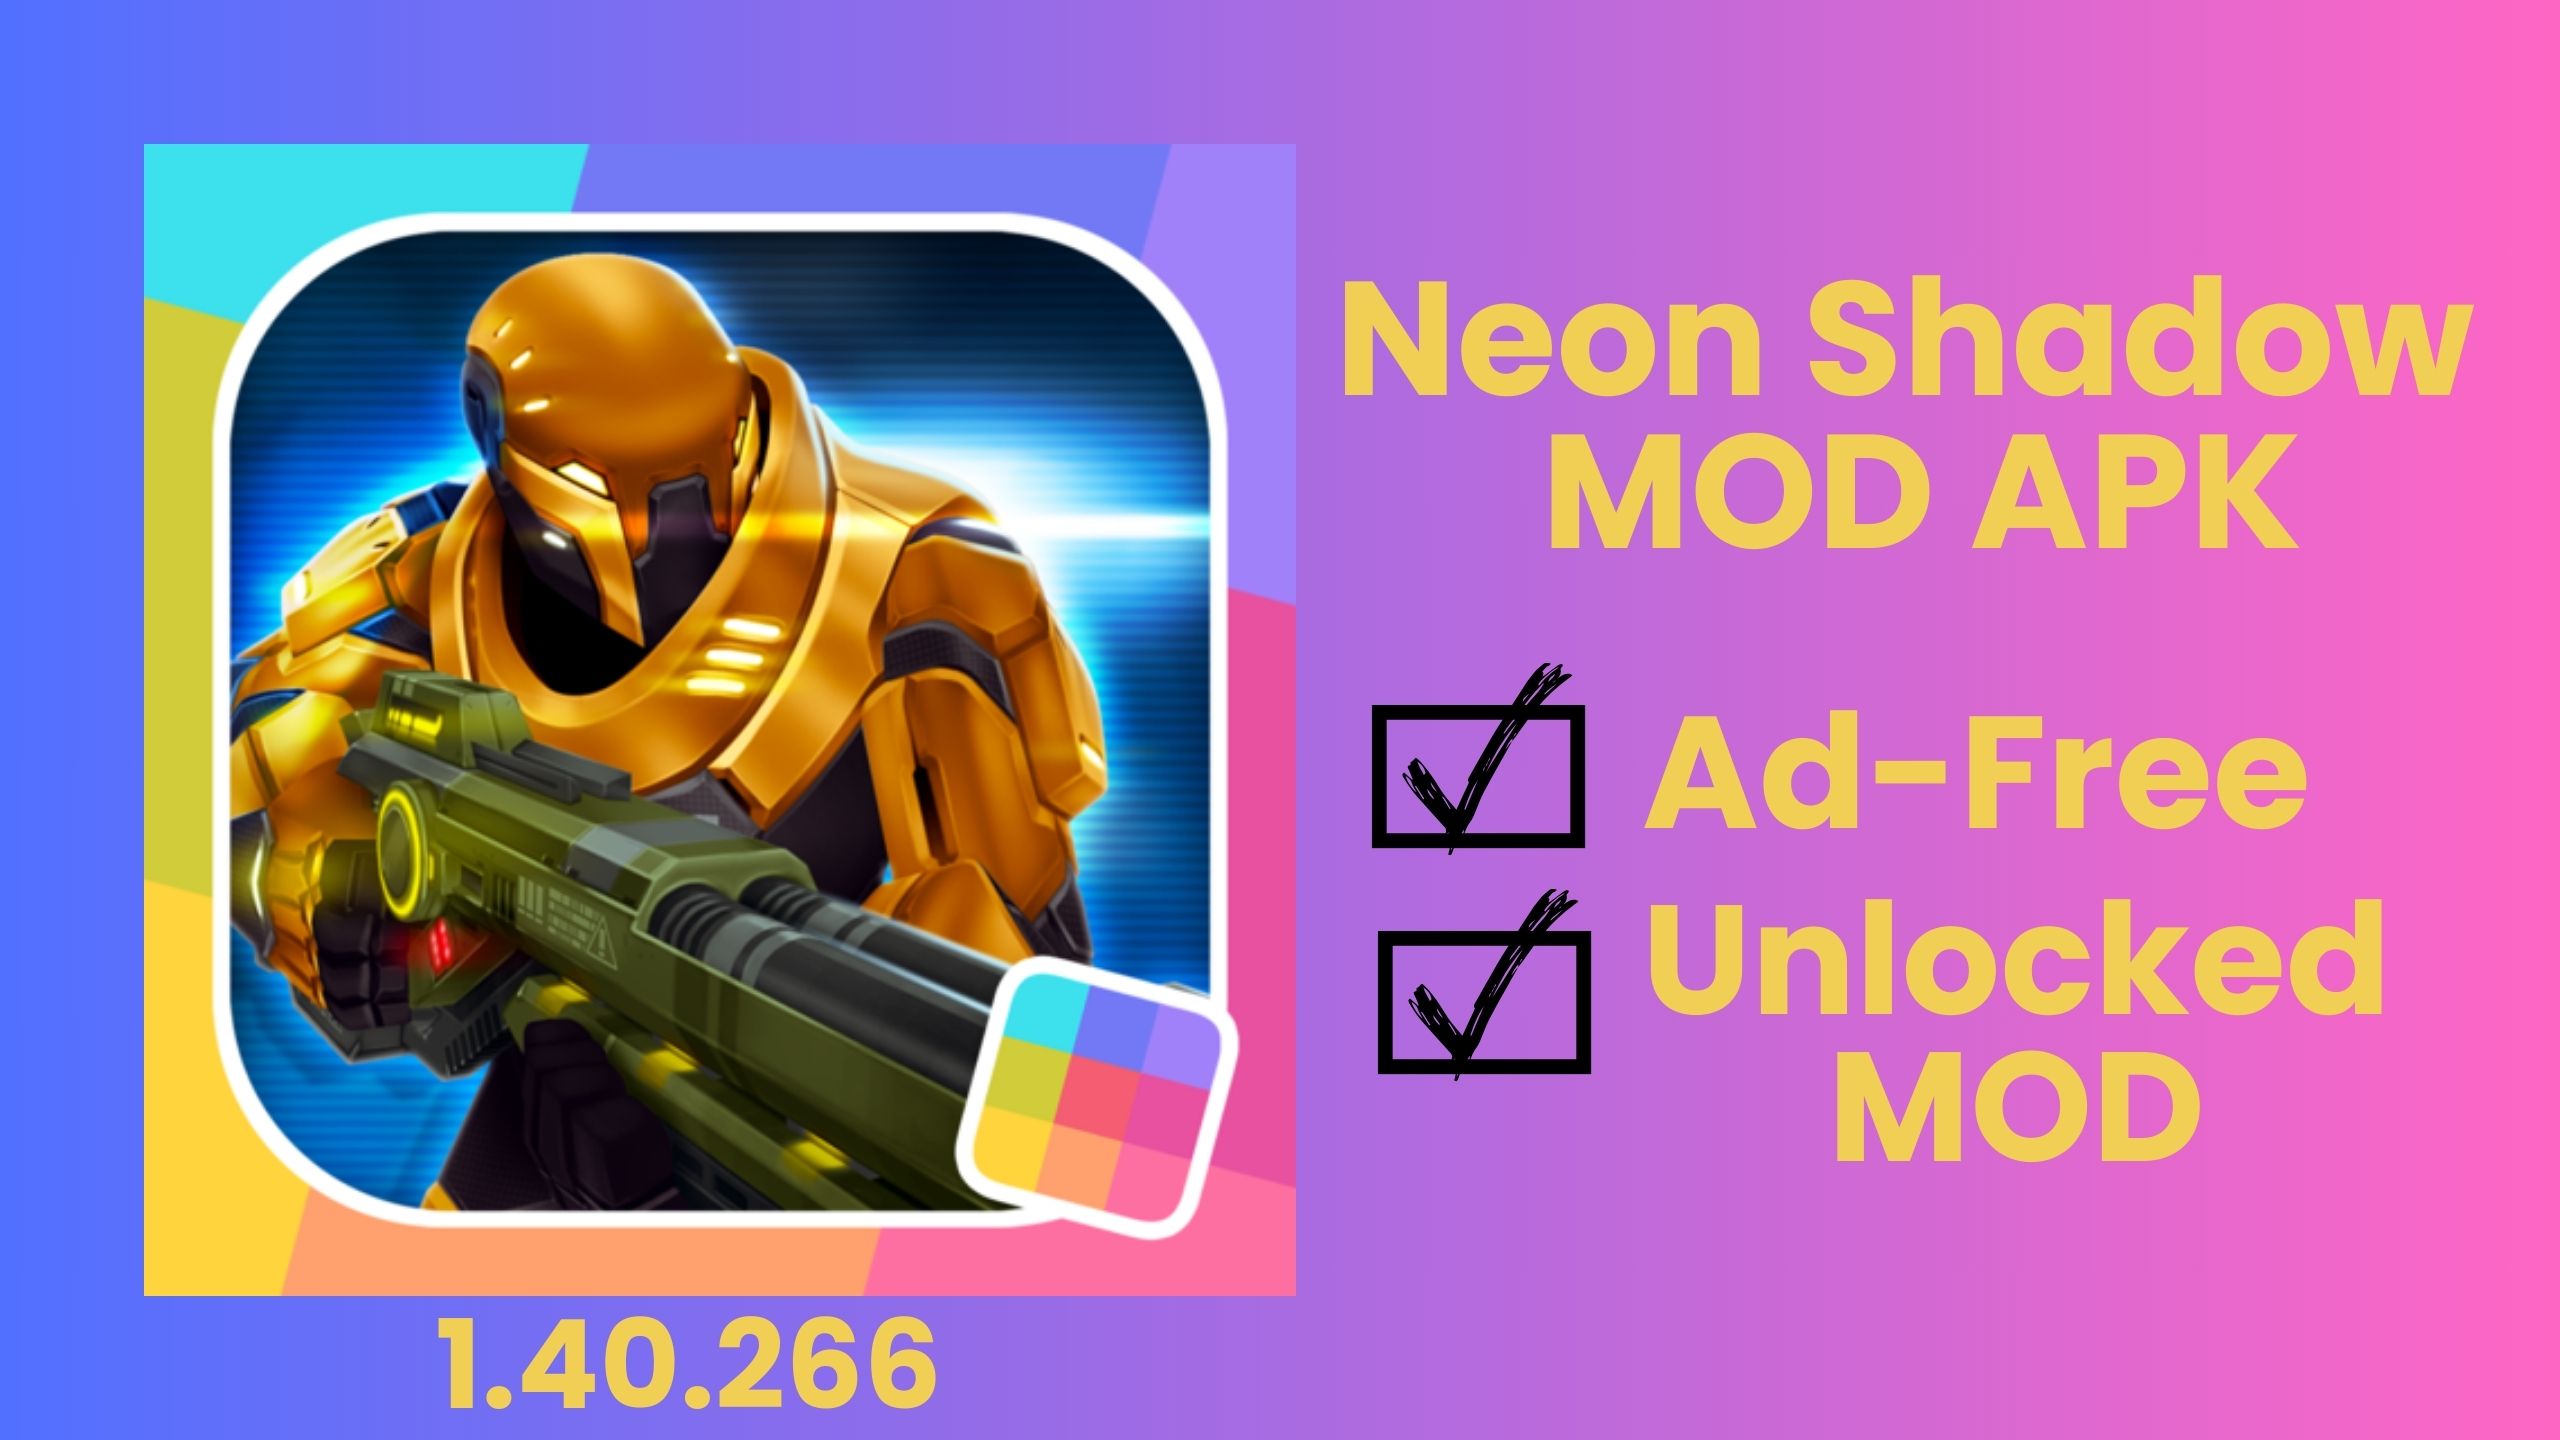 Neon Shadow MOD APK v1.40.266